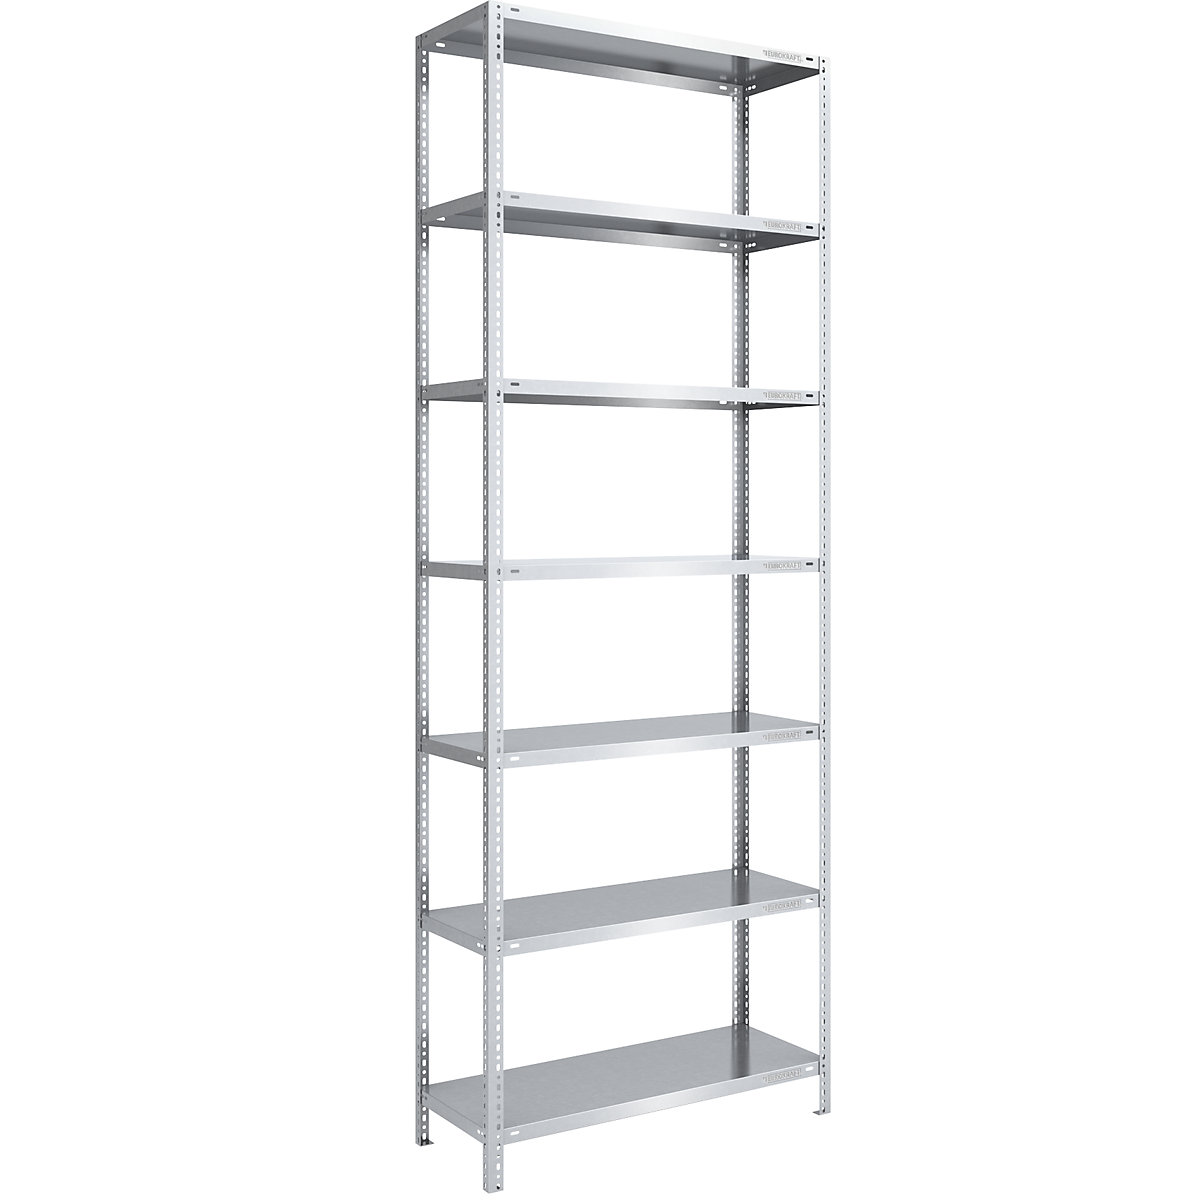 Bolt-together shelf unit, light duty, zinc plated – eurokraft pro, shelf unit height 3000 mm, shelf width 1000 mm, depth 500 mm, standard shelf unit-10